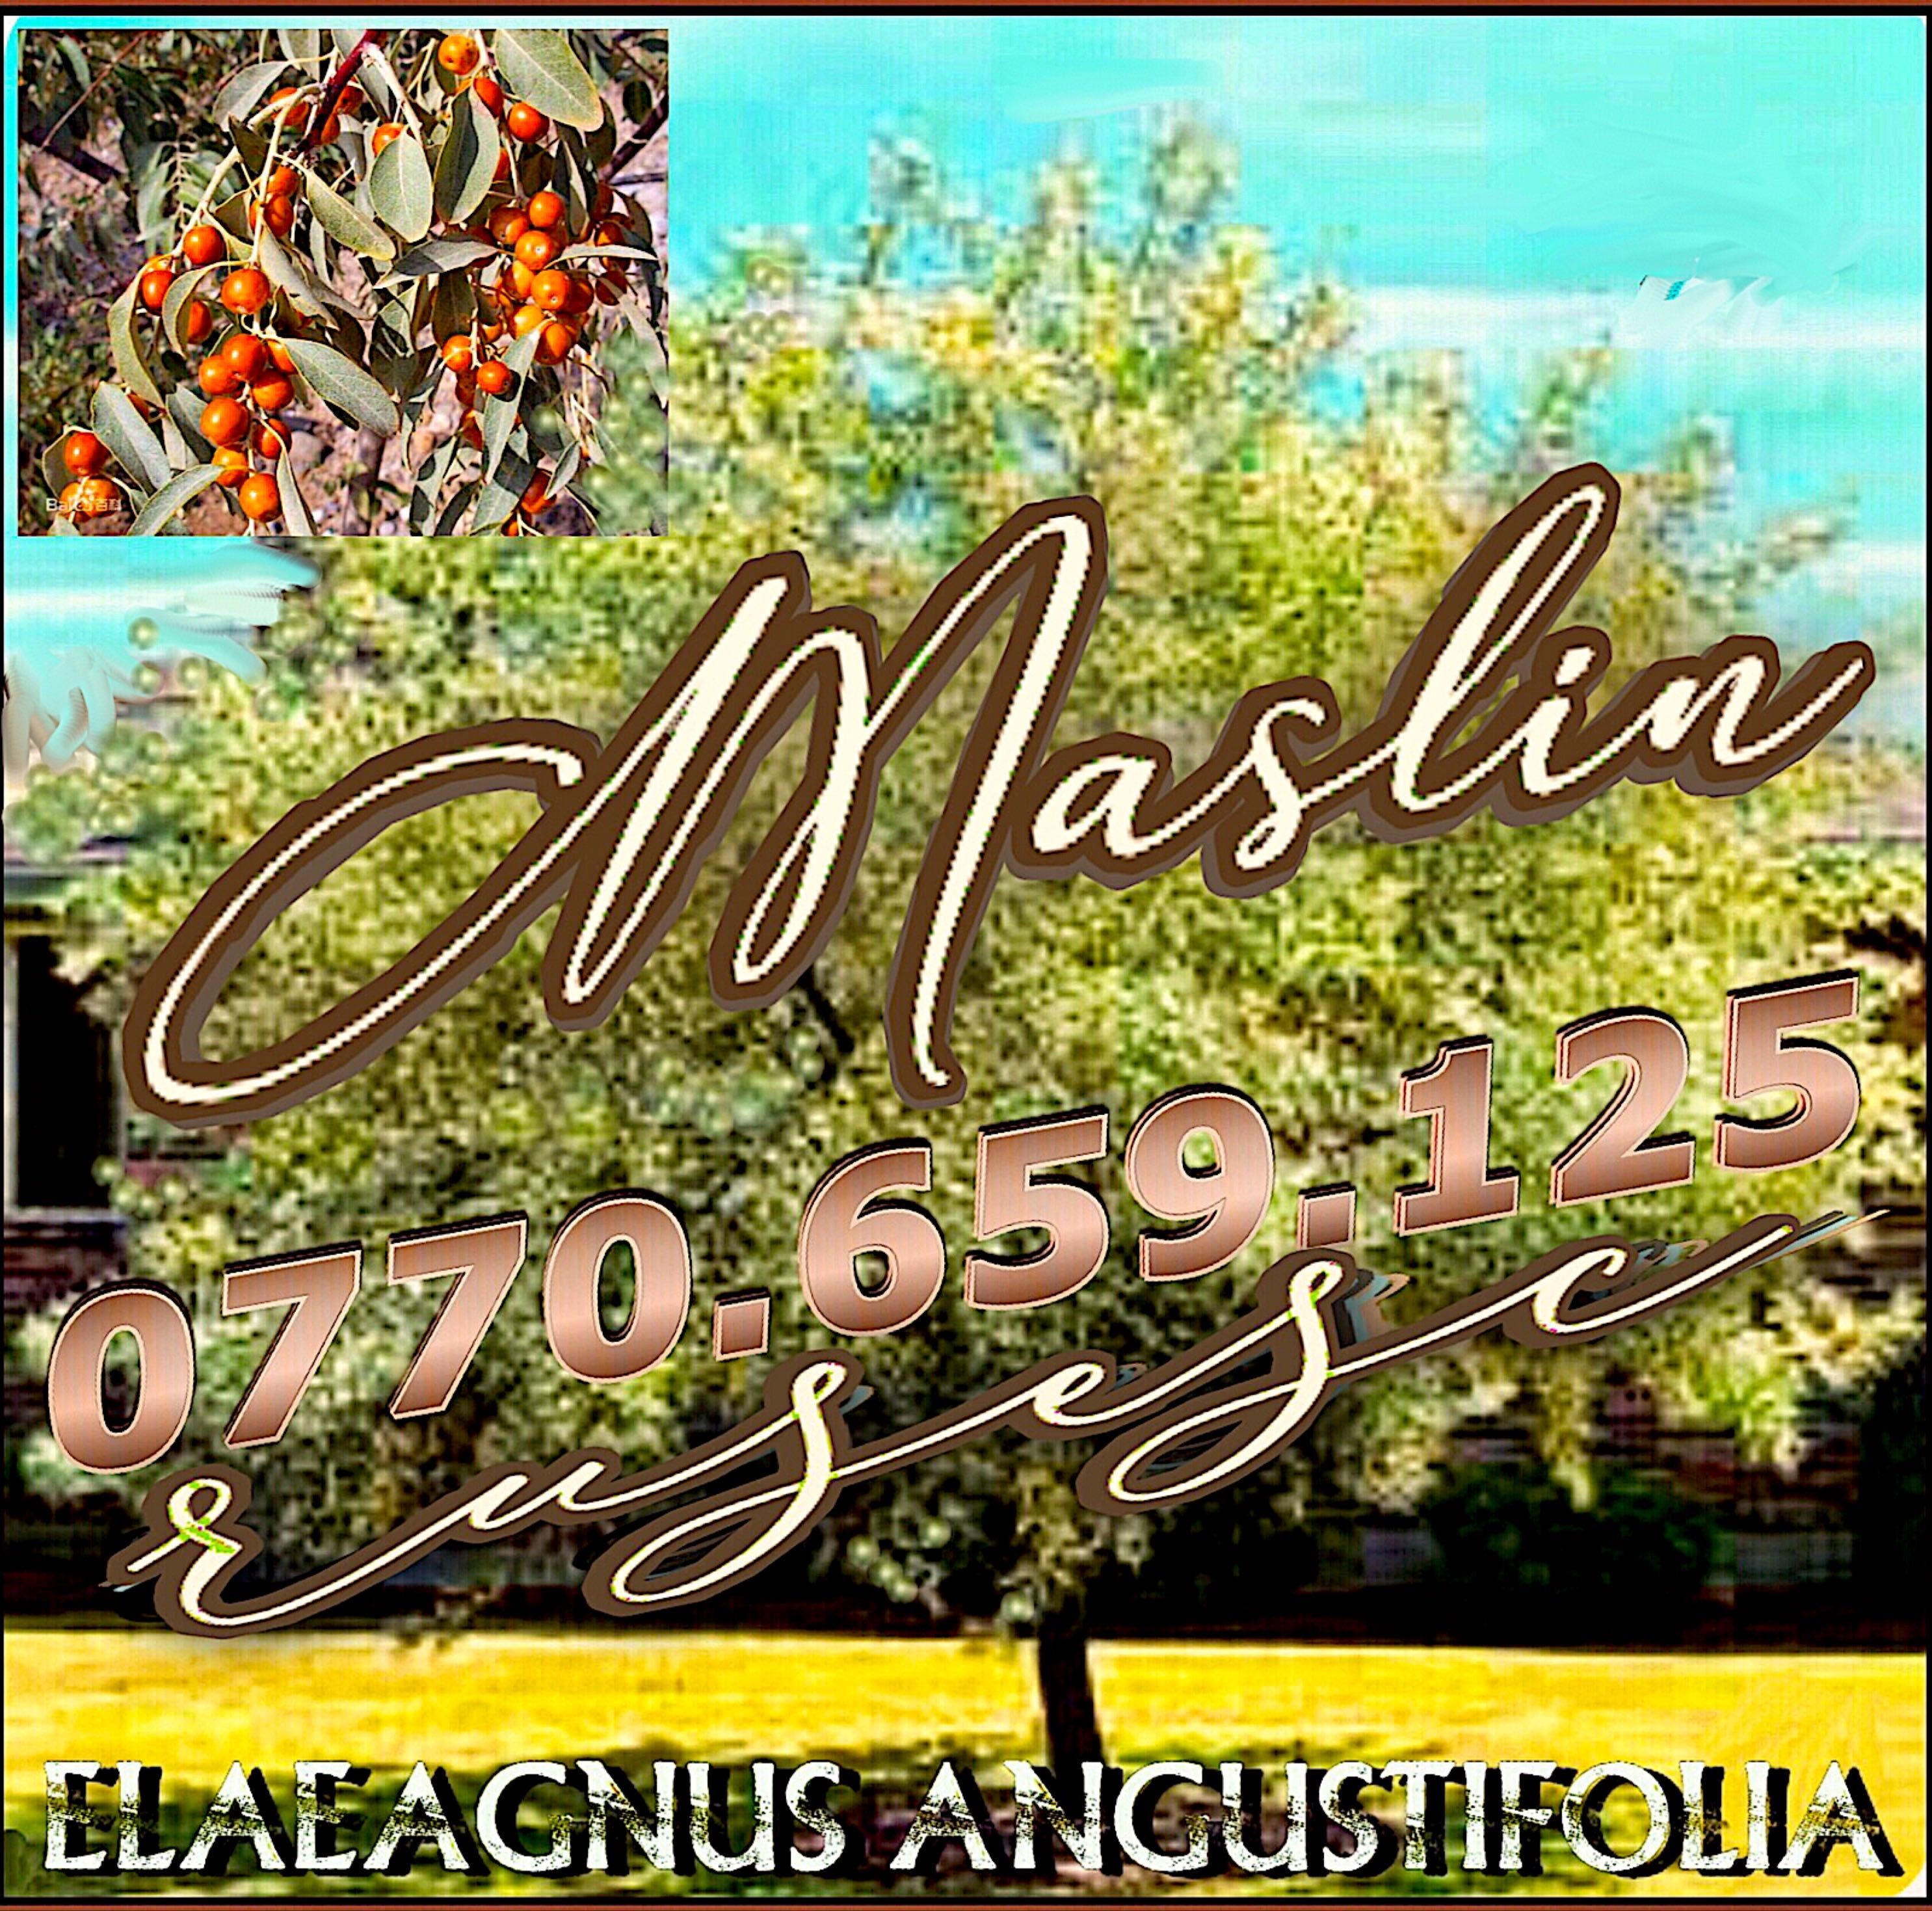 Maslin rusesc (Elaeagnus angustifolia)